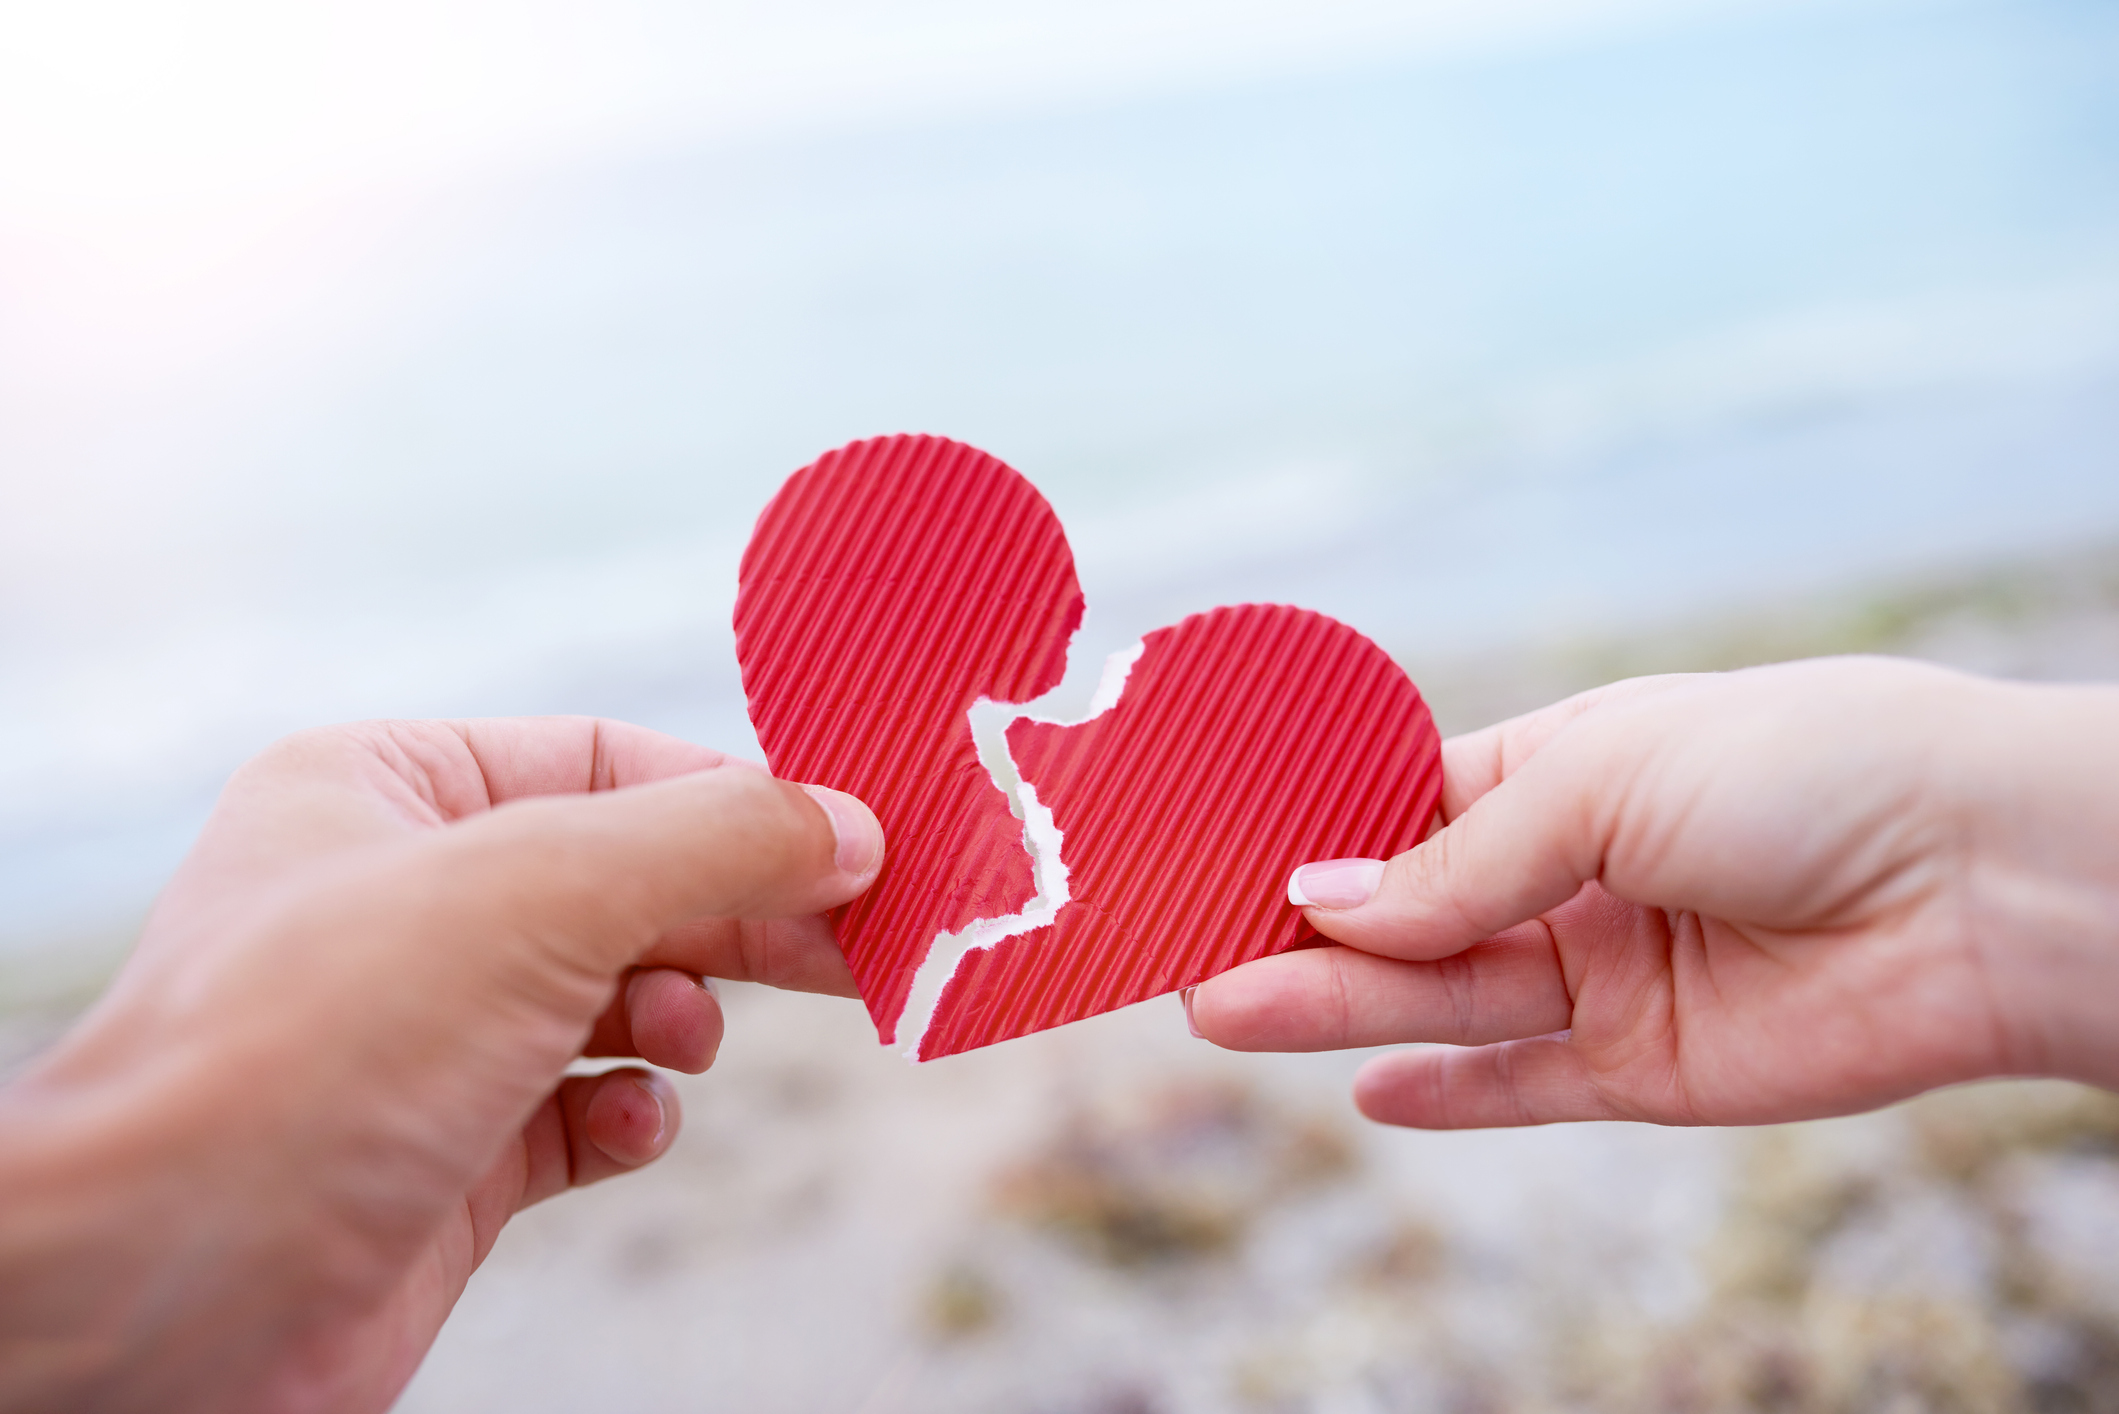 Going through a break-up? Five tips to help mend your broken heart